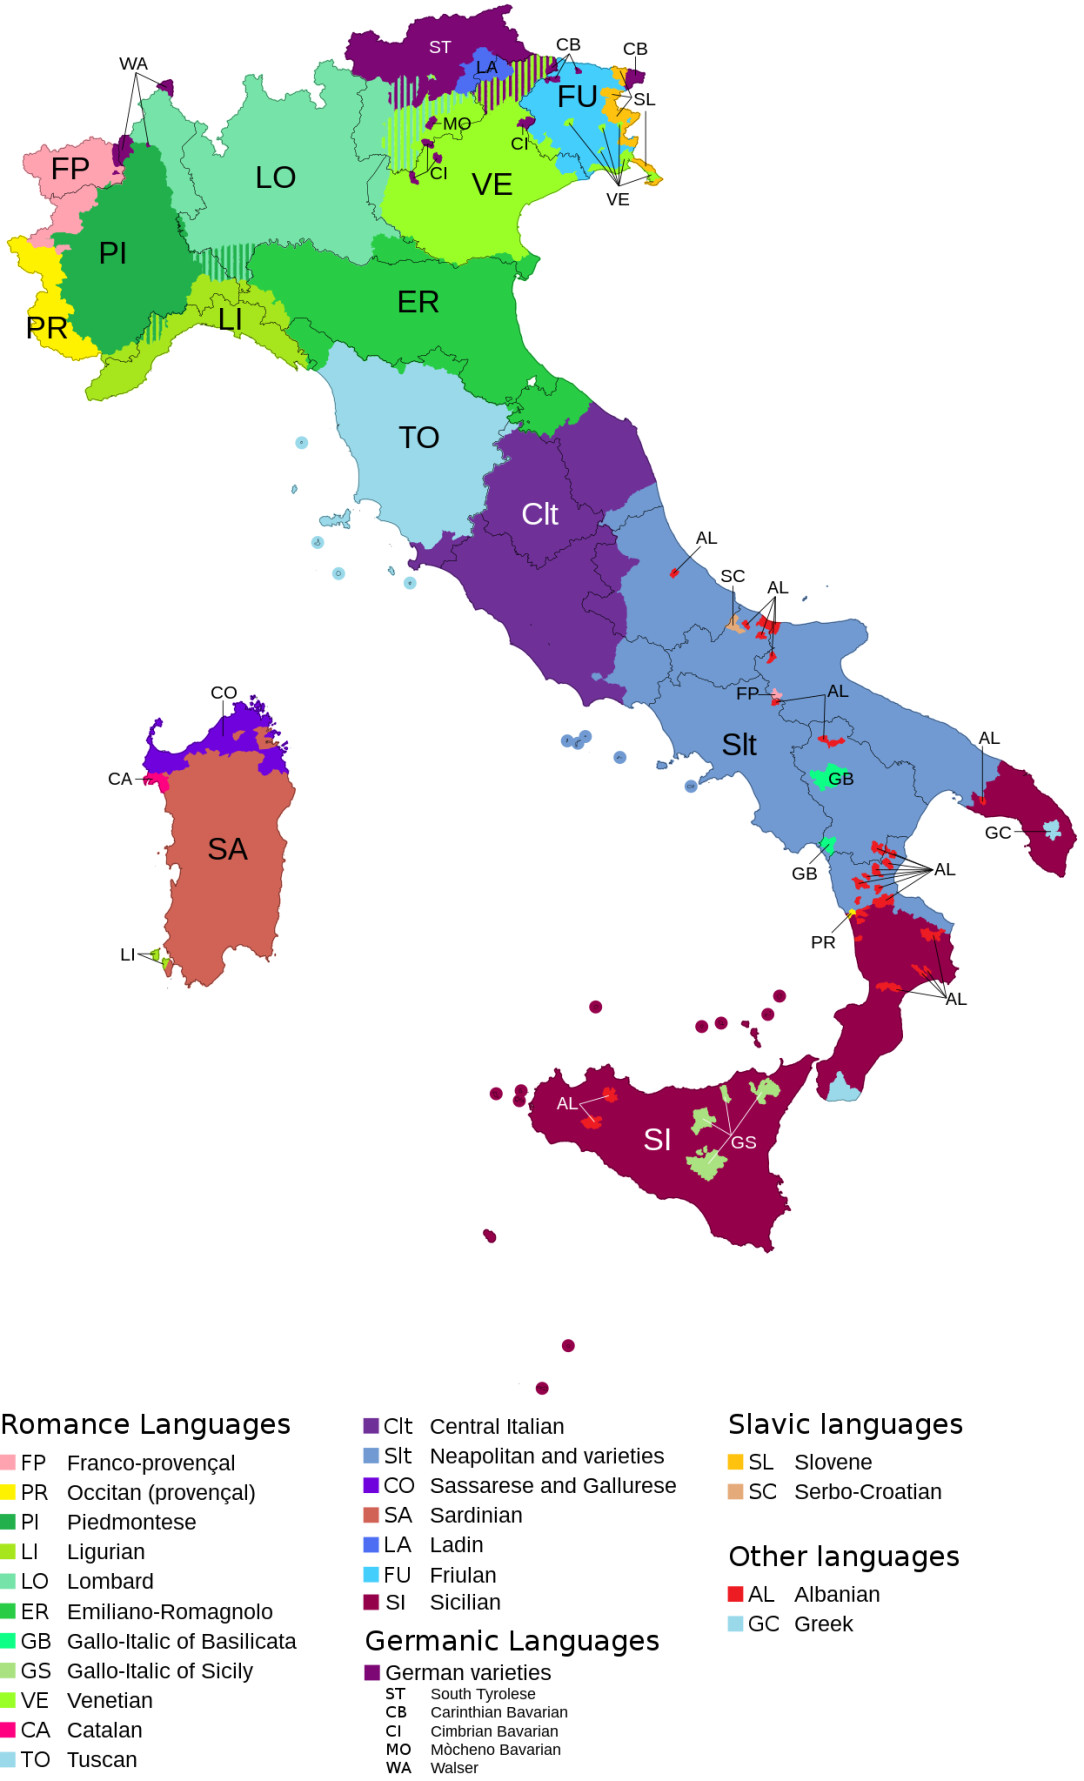 Languages of the Italian peninsula